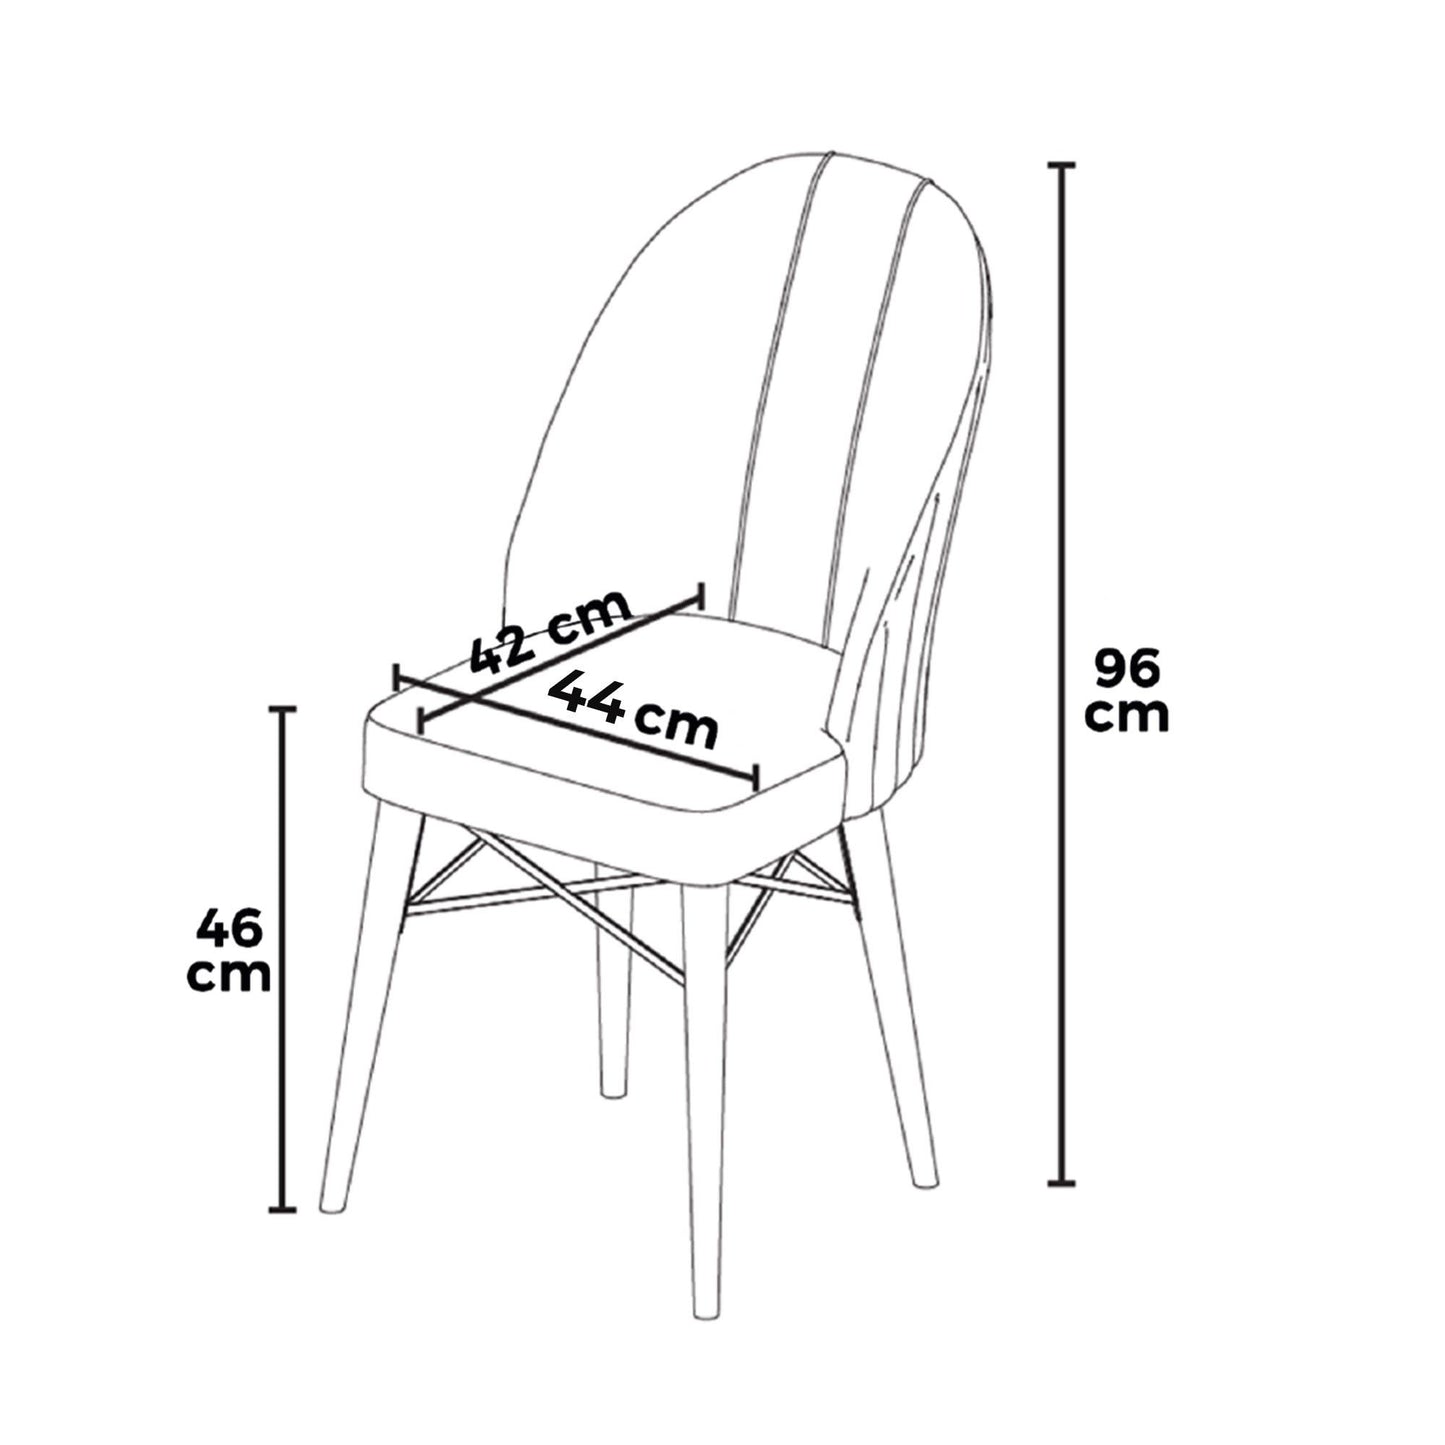 Ritim - Anthracite, White - Chair Set (4 Pieces)